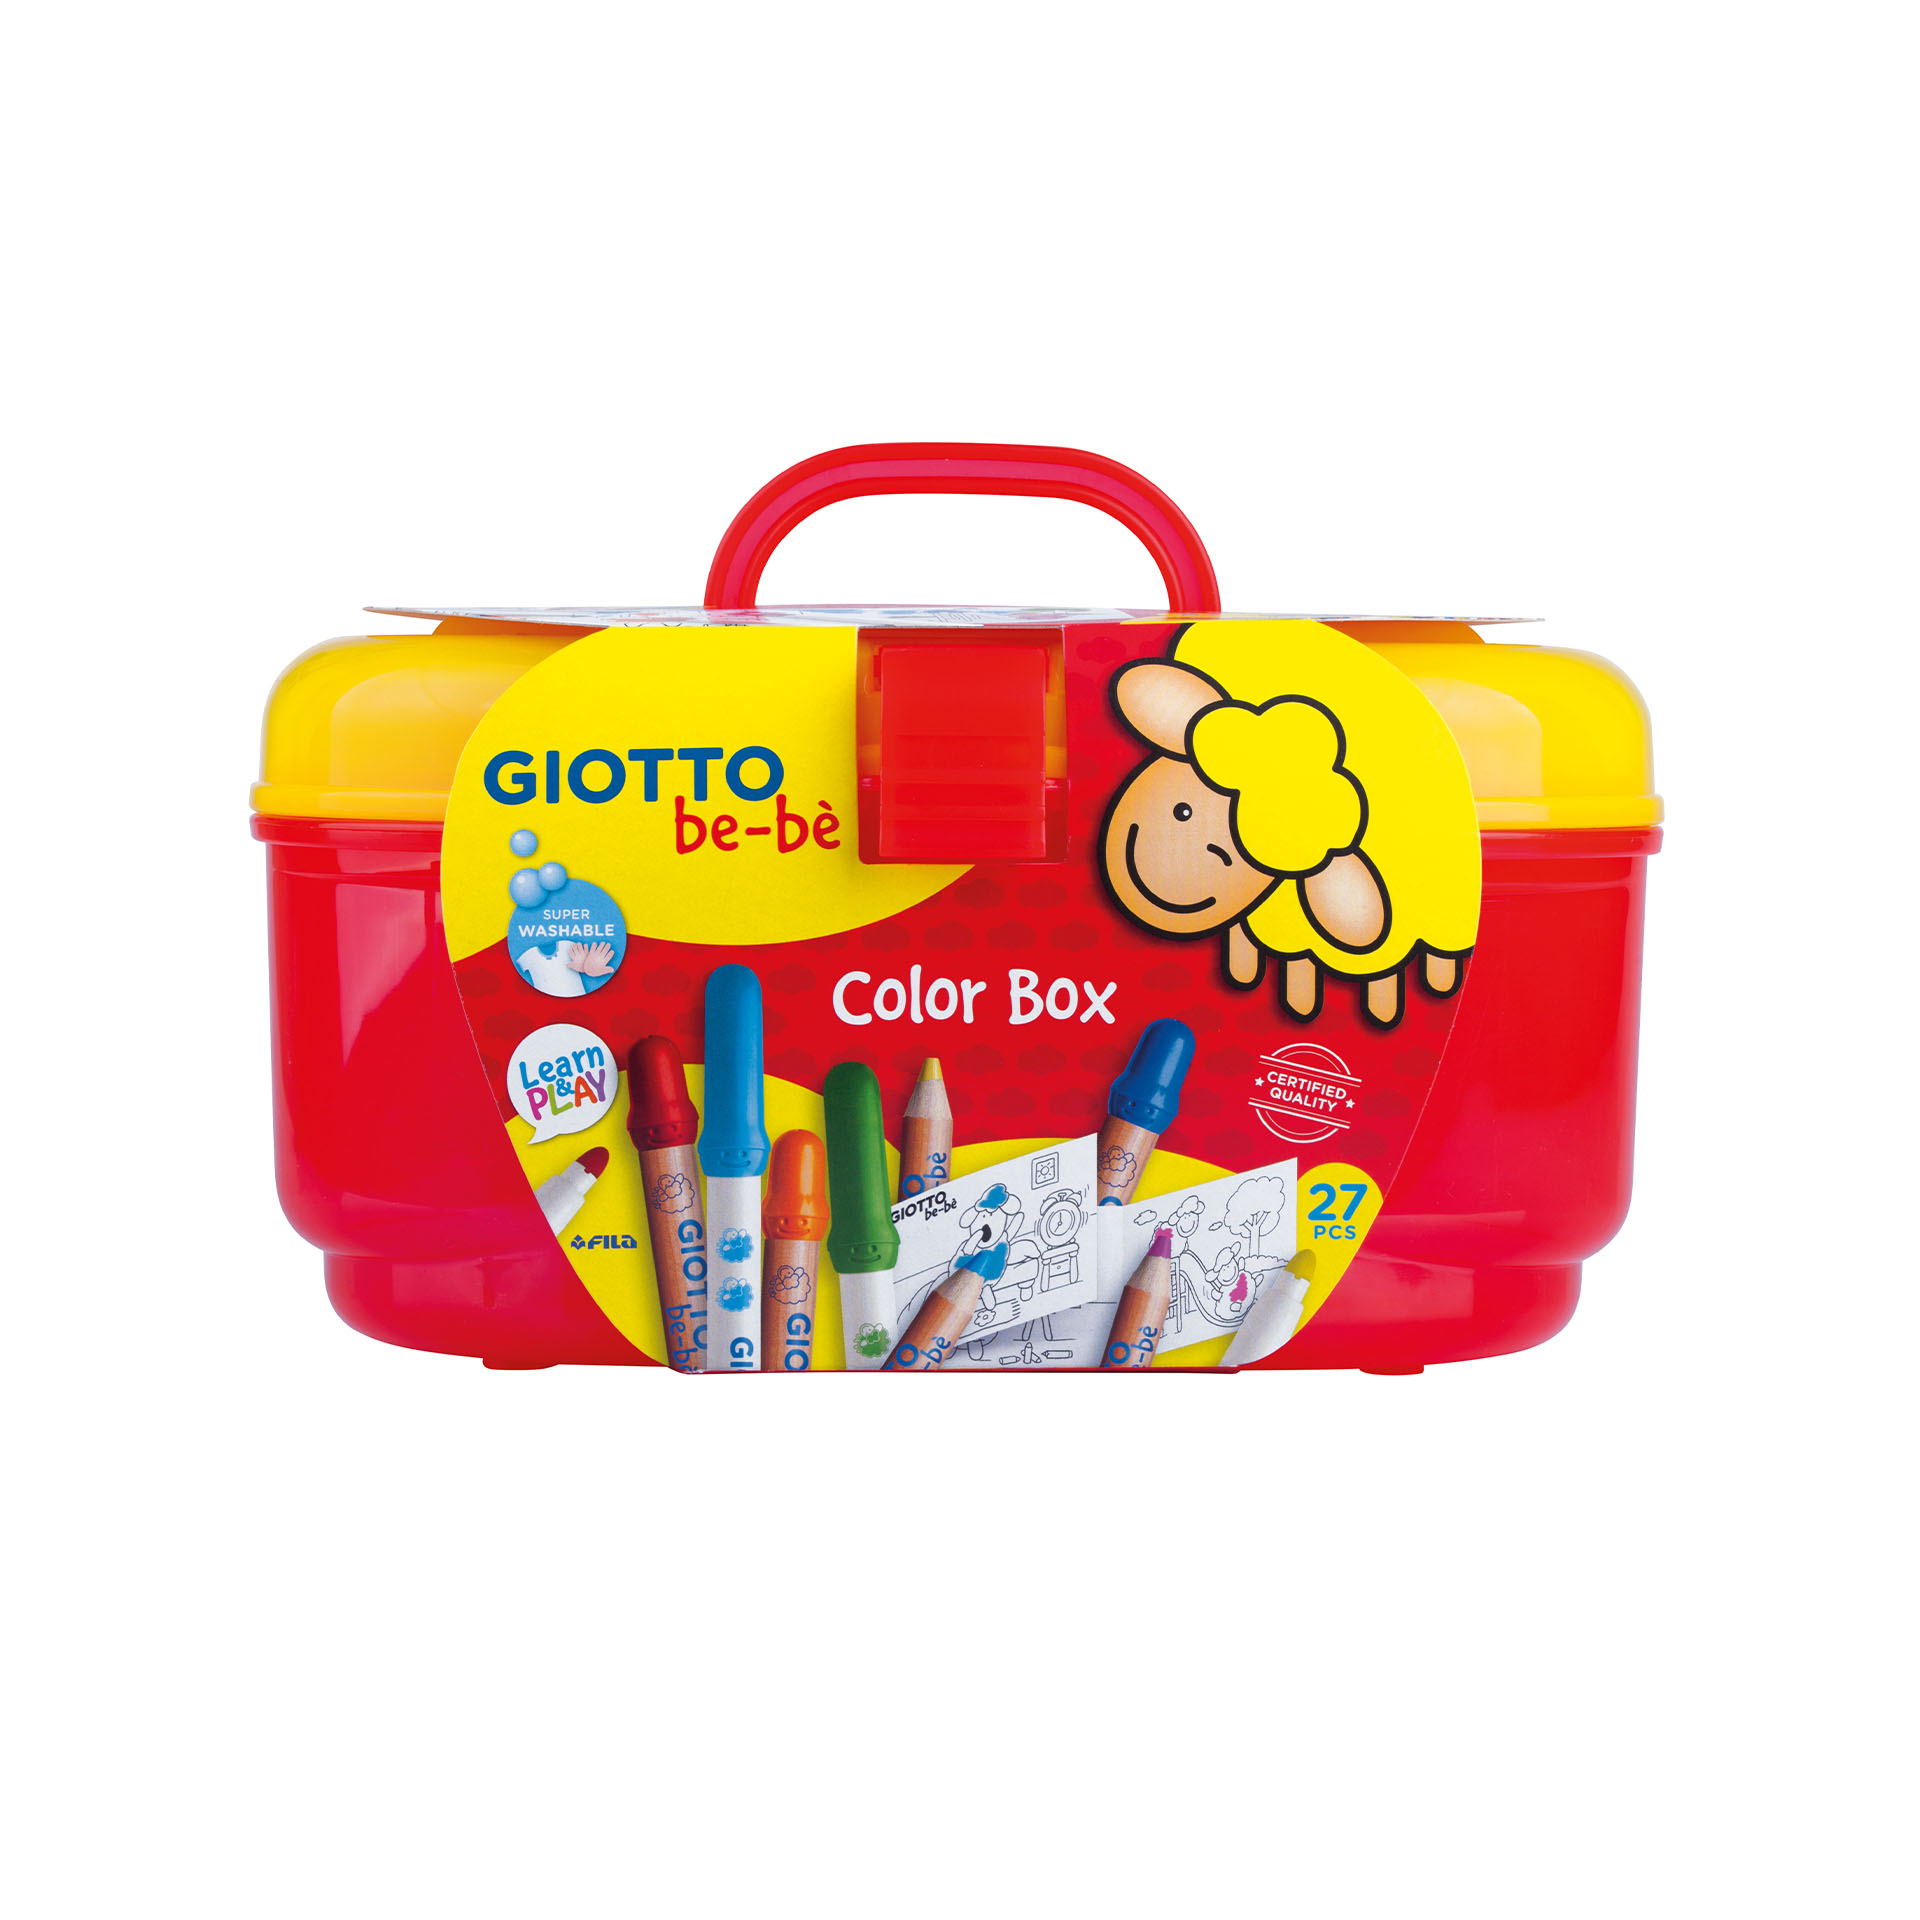 Giotto be-bè Color box, , large